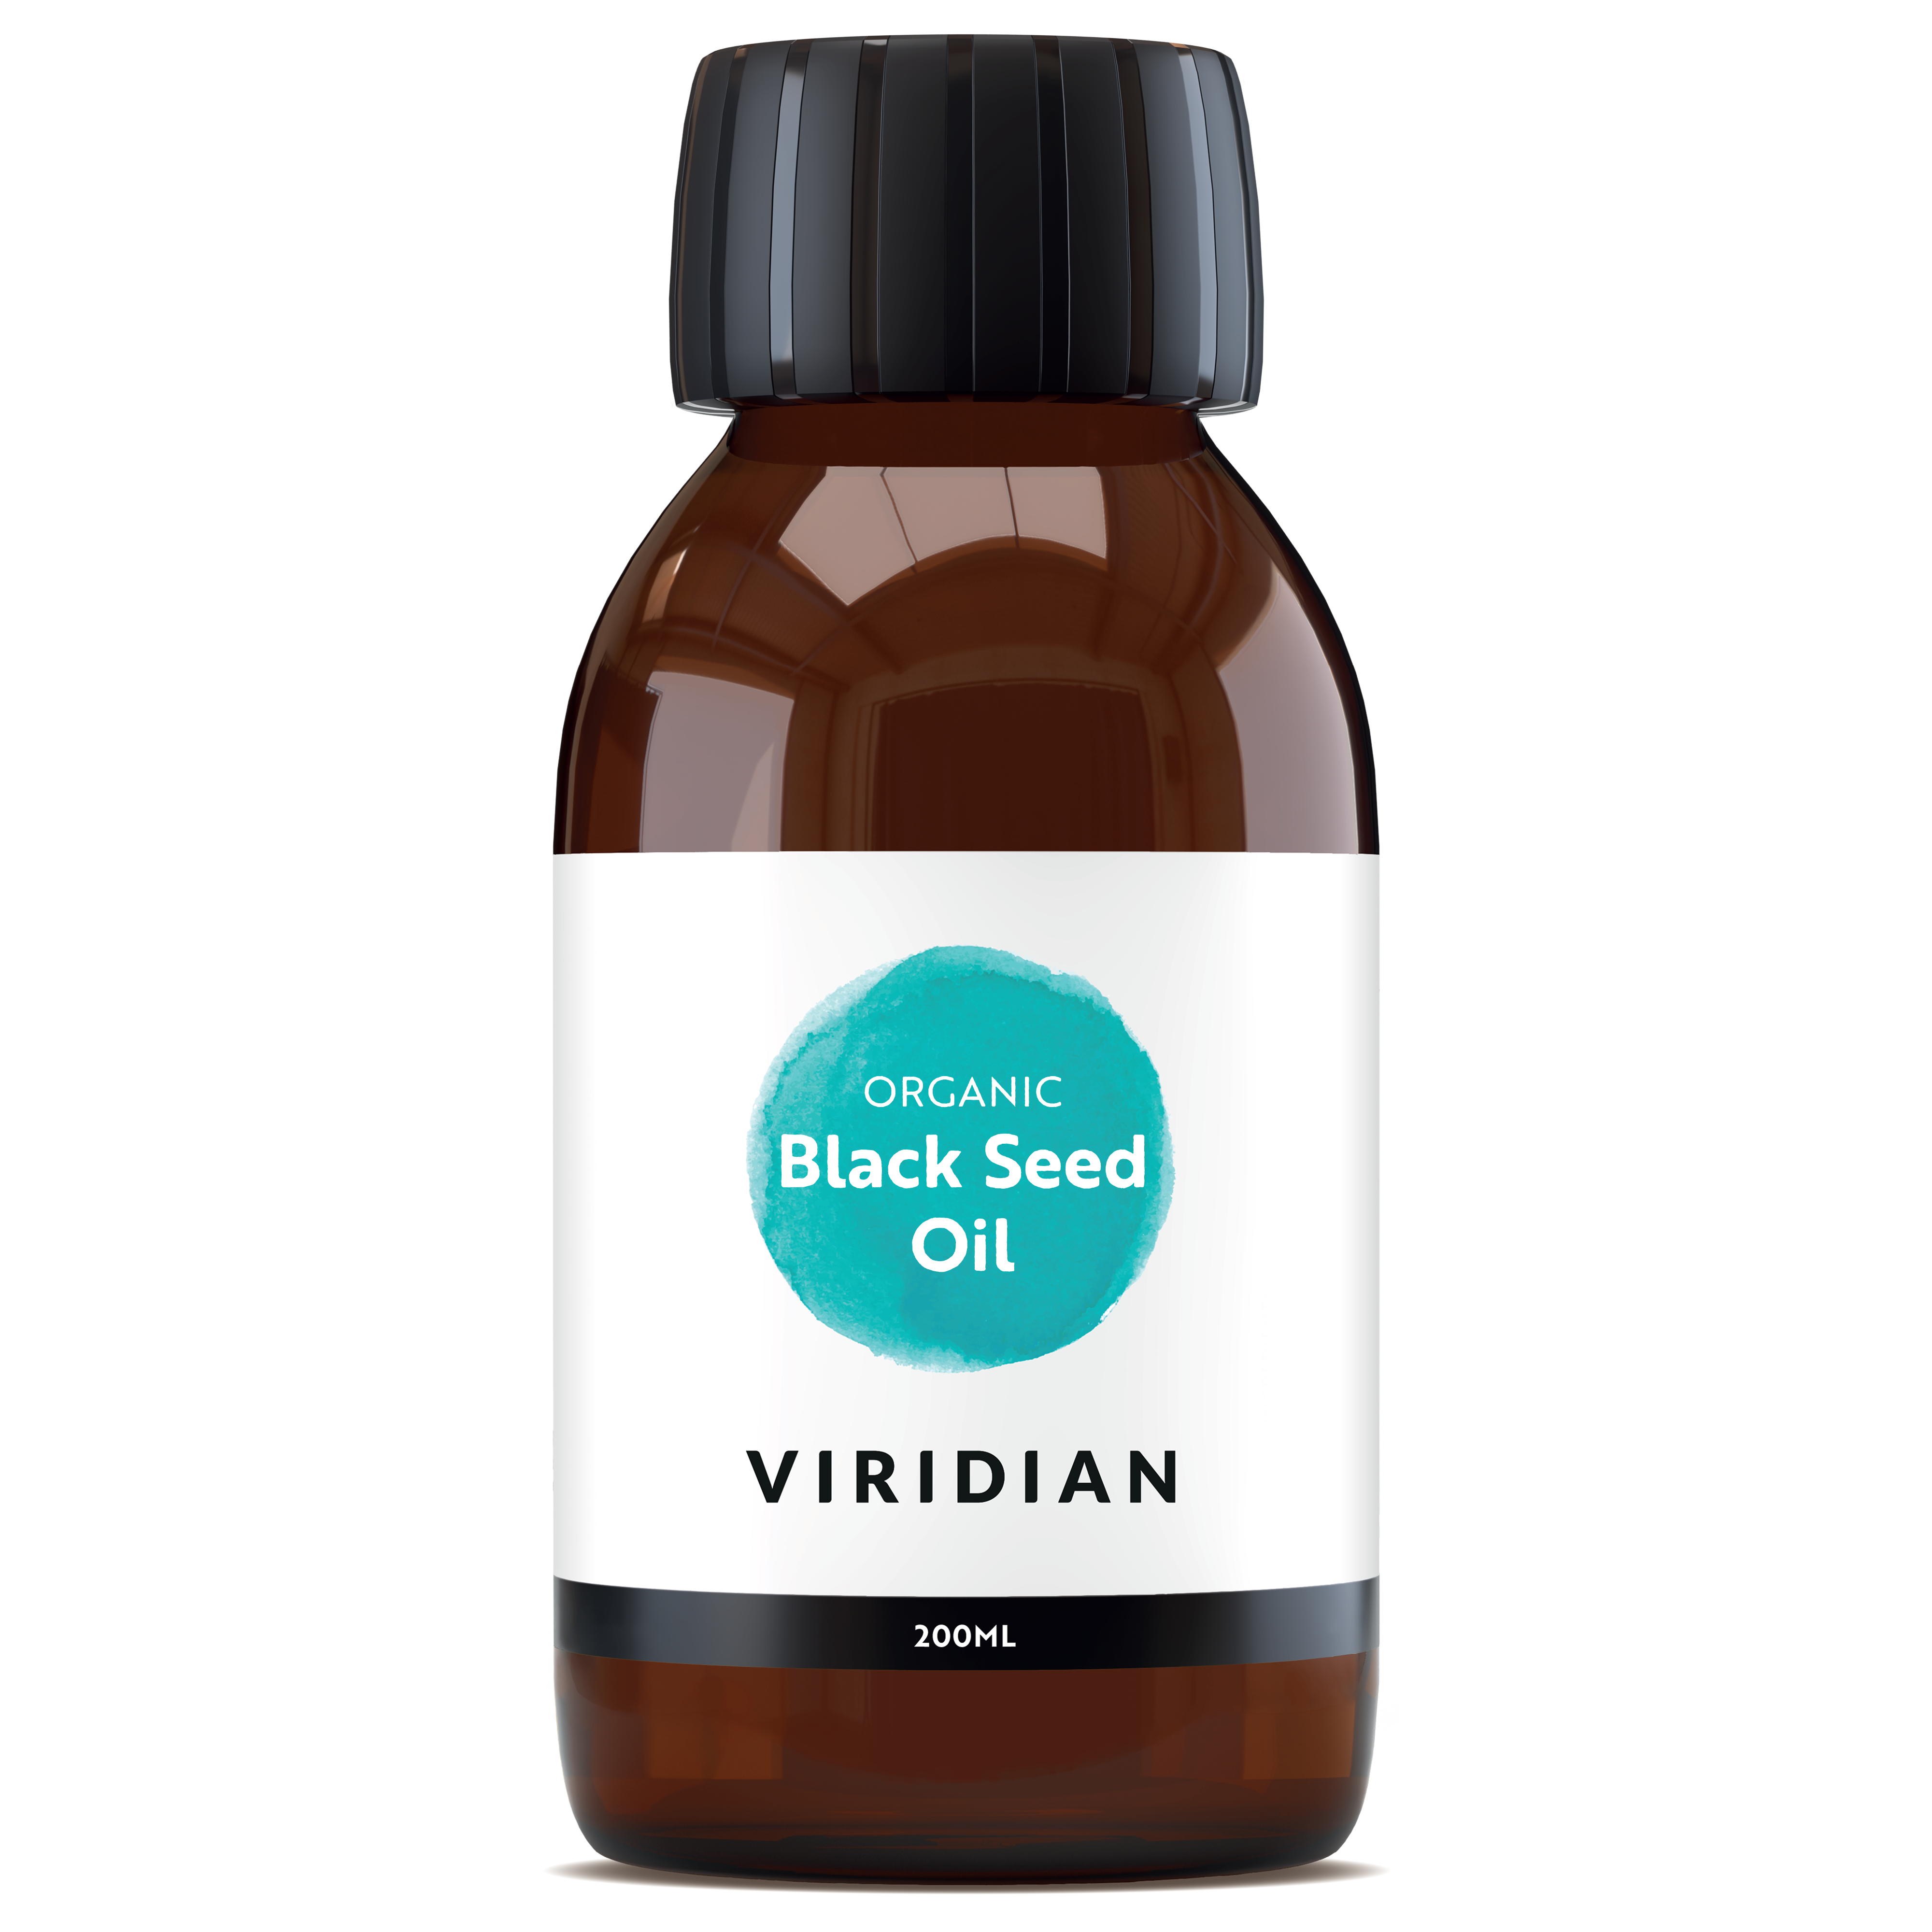 Viridian Organic Black Seed Oil 200Ml - Your Health Store